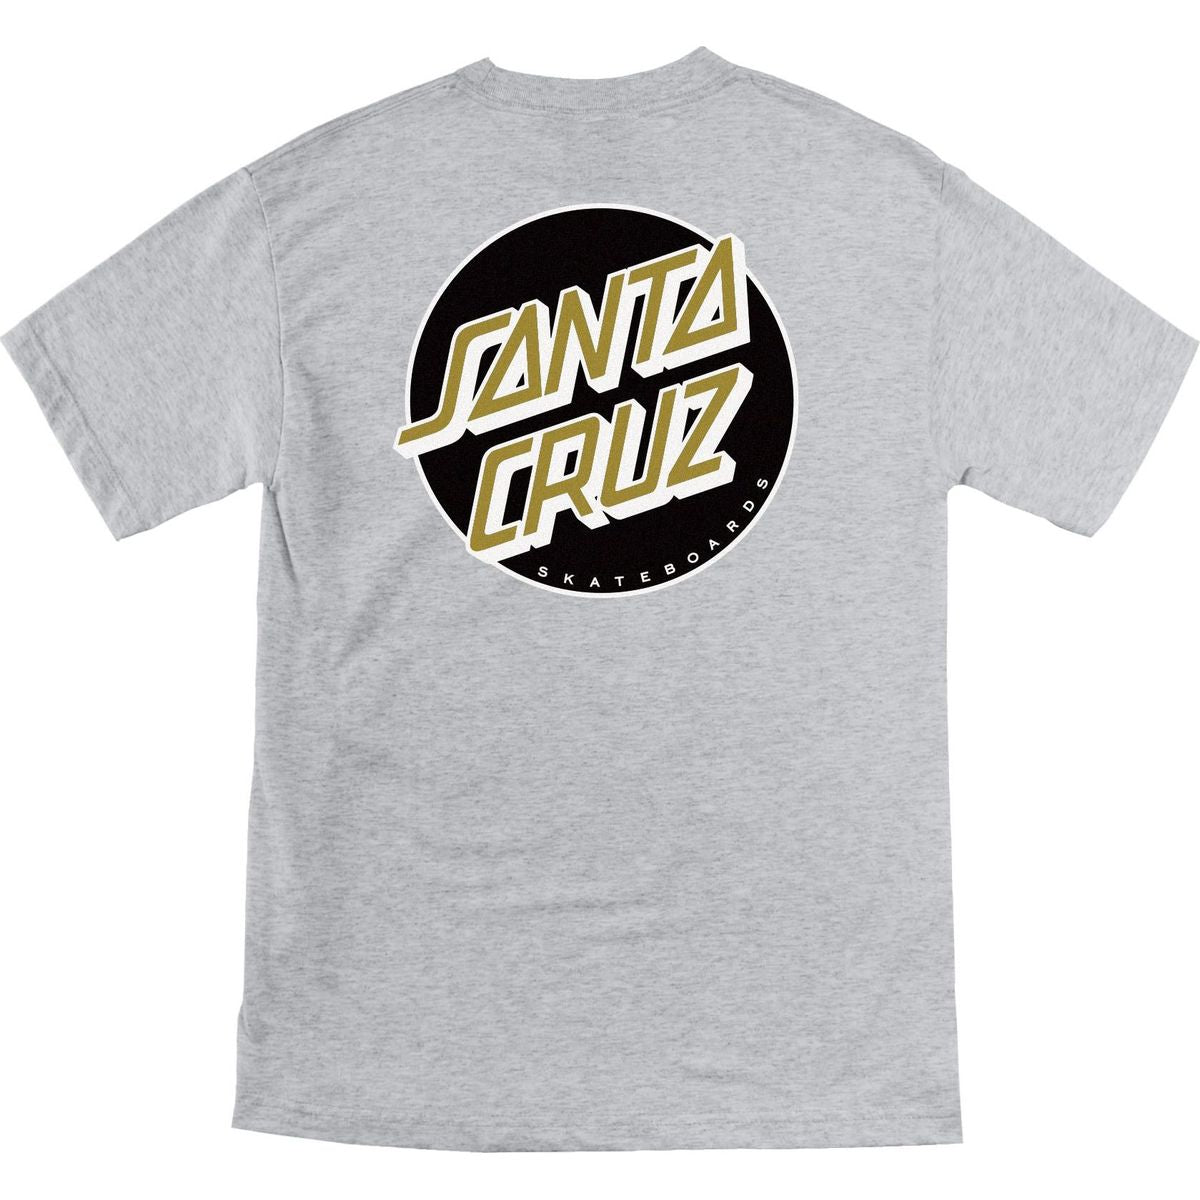 Santa Cruz Other Dot T-Shirt - Heather Grey/Black/Gold image 2